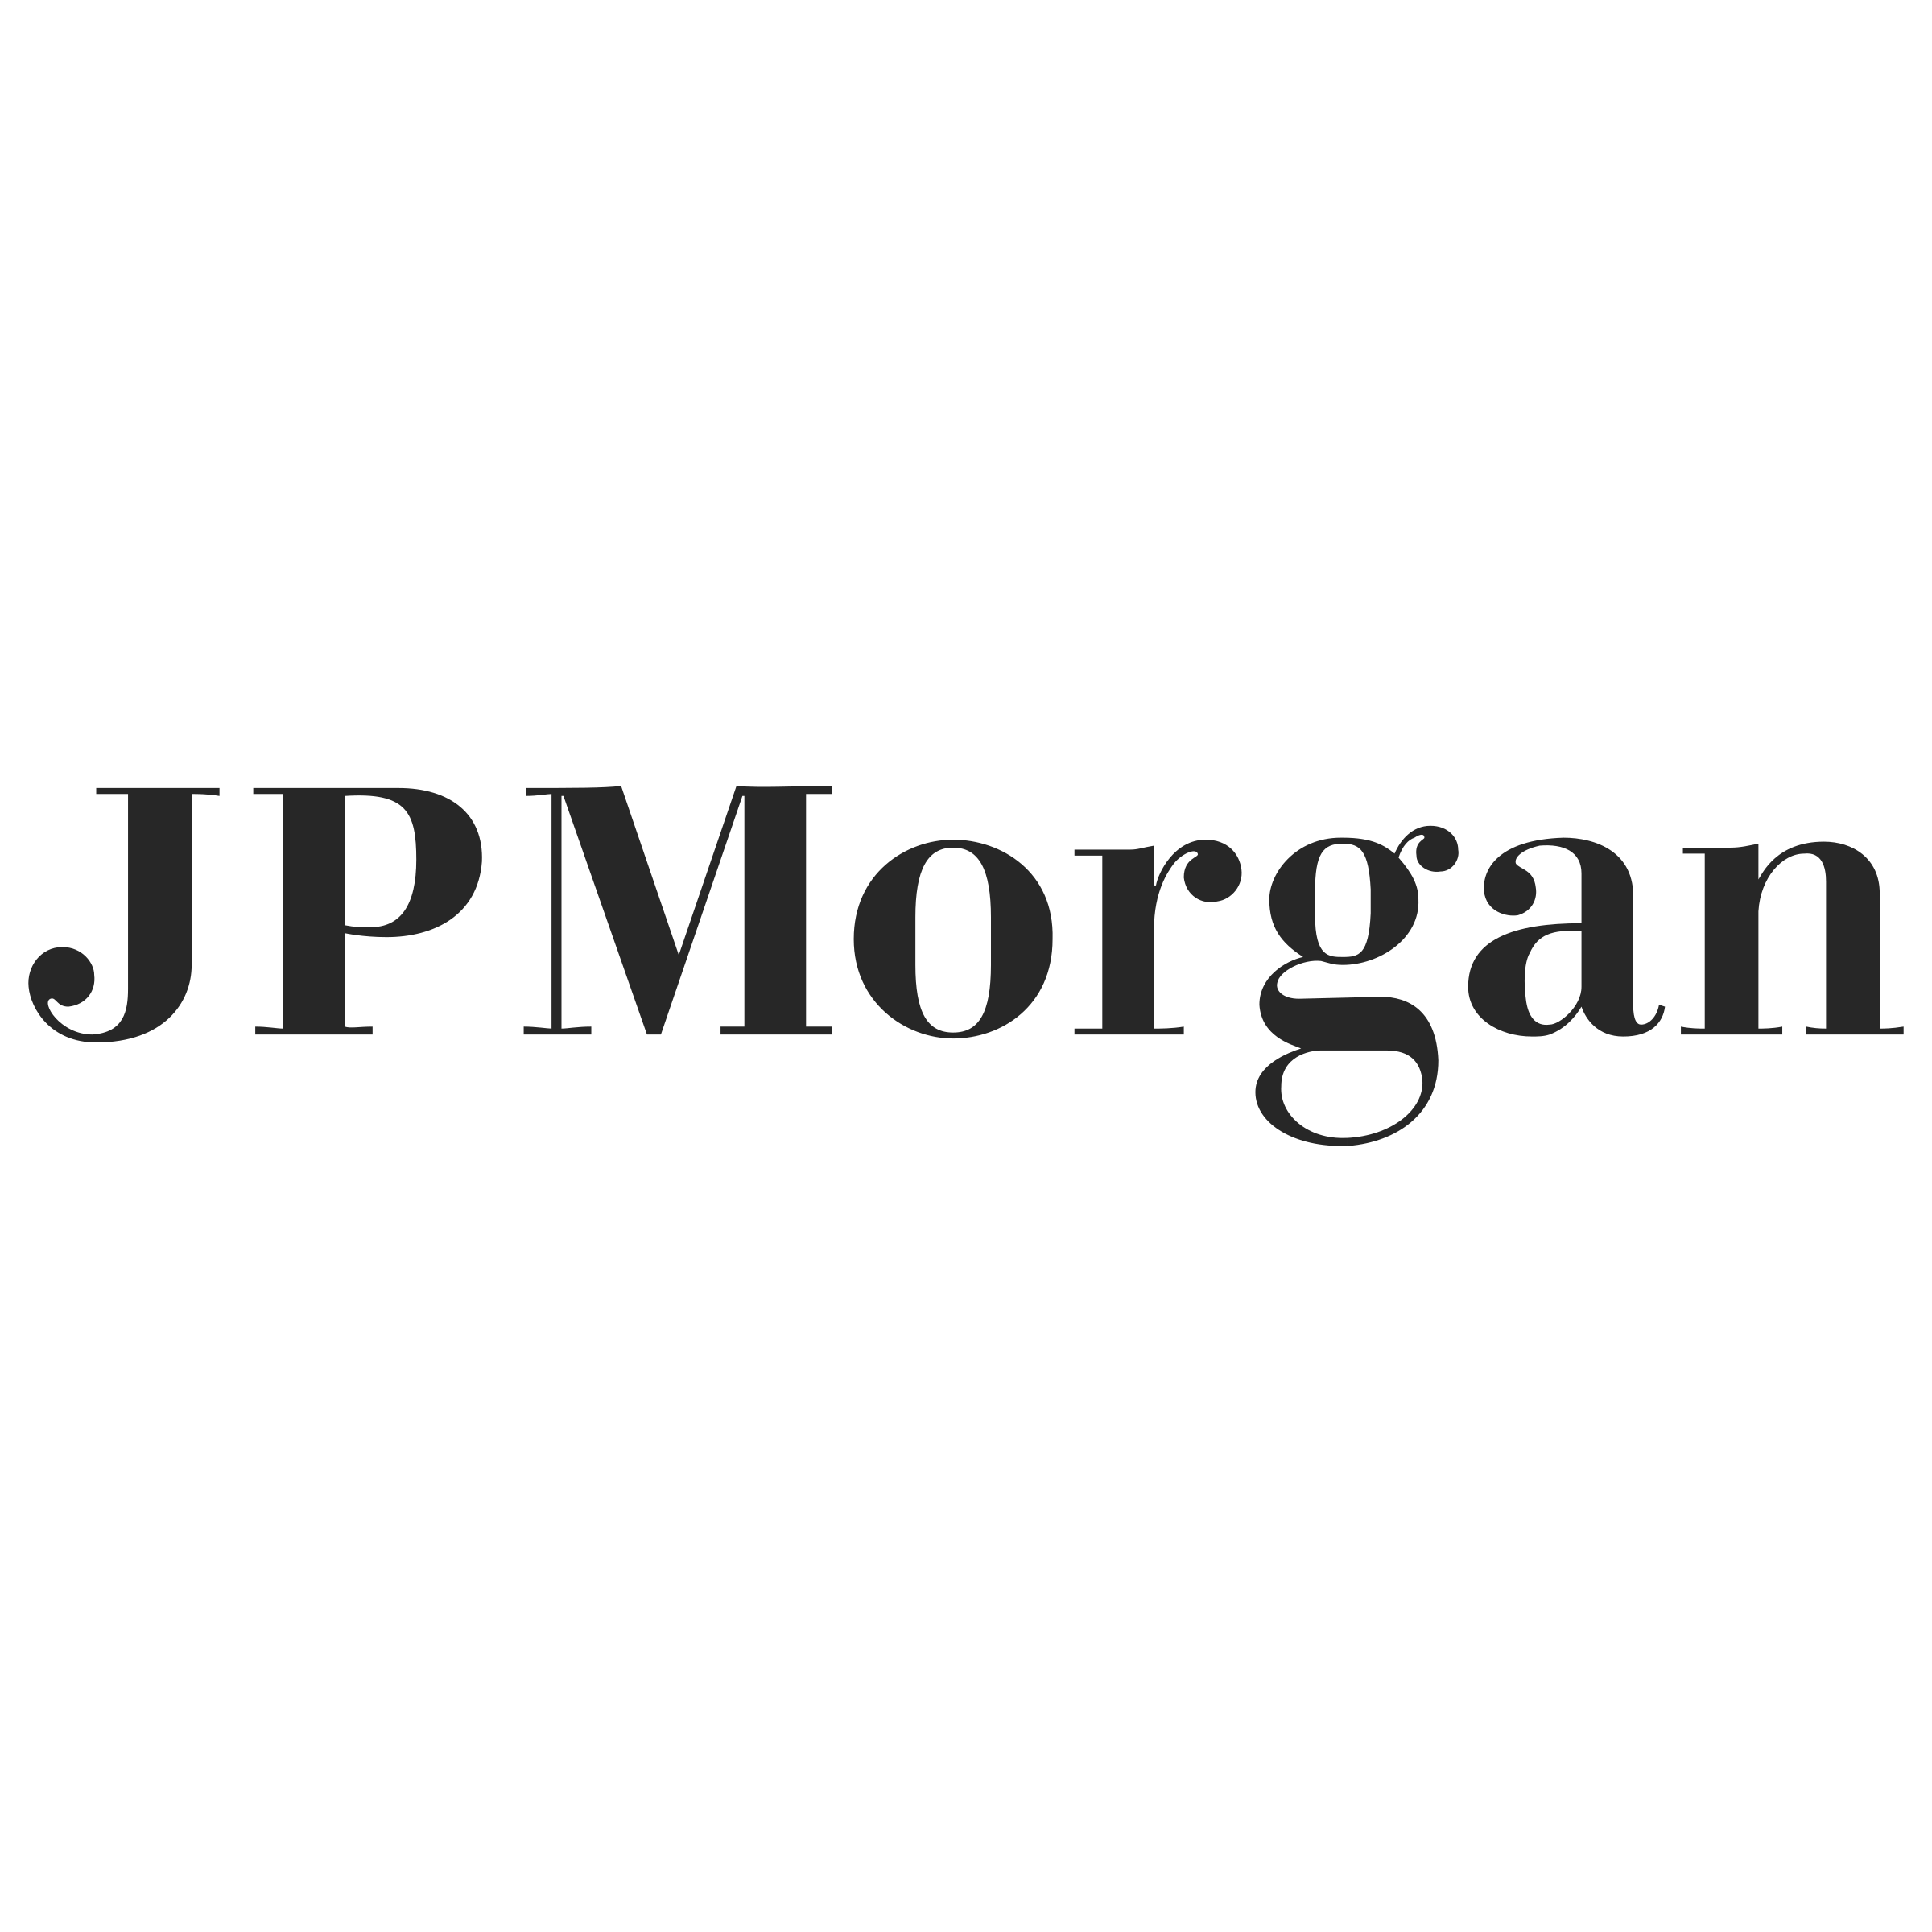 JPMorgan Logo - JPMorgan Logo PNG Transparent & SVG Vector - Freebie Supply